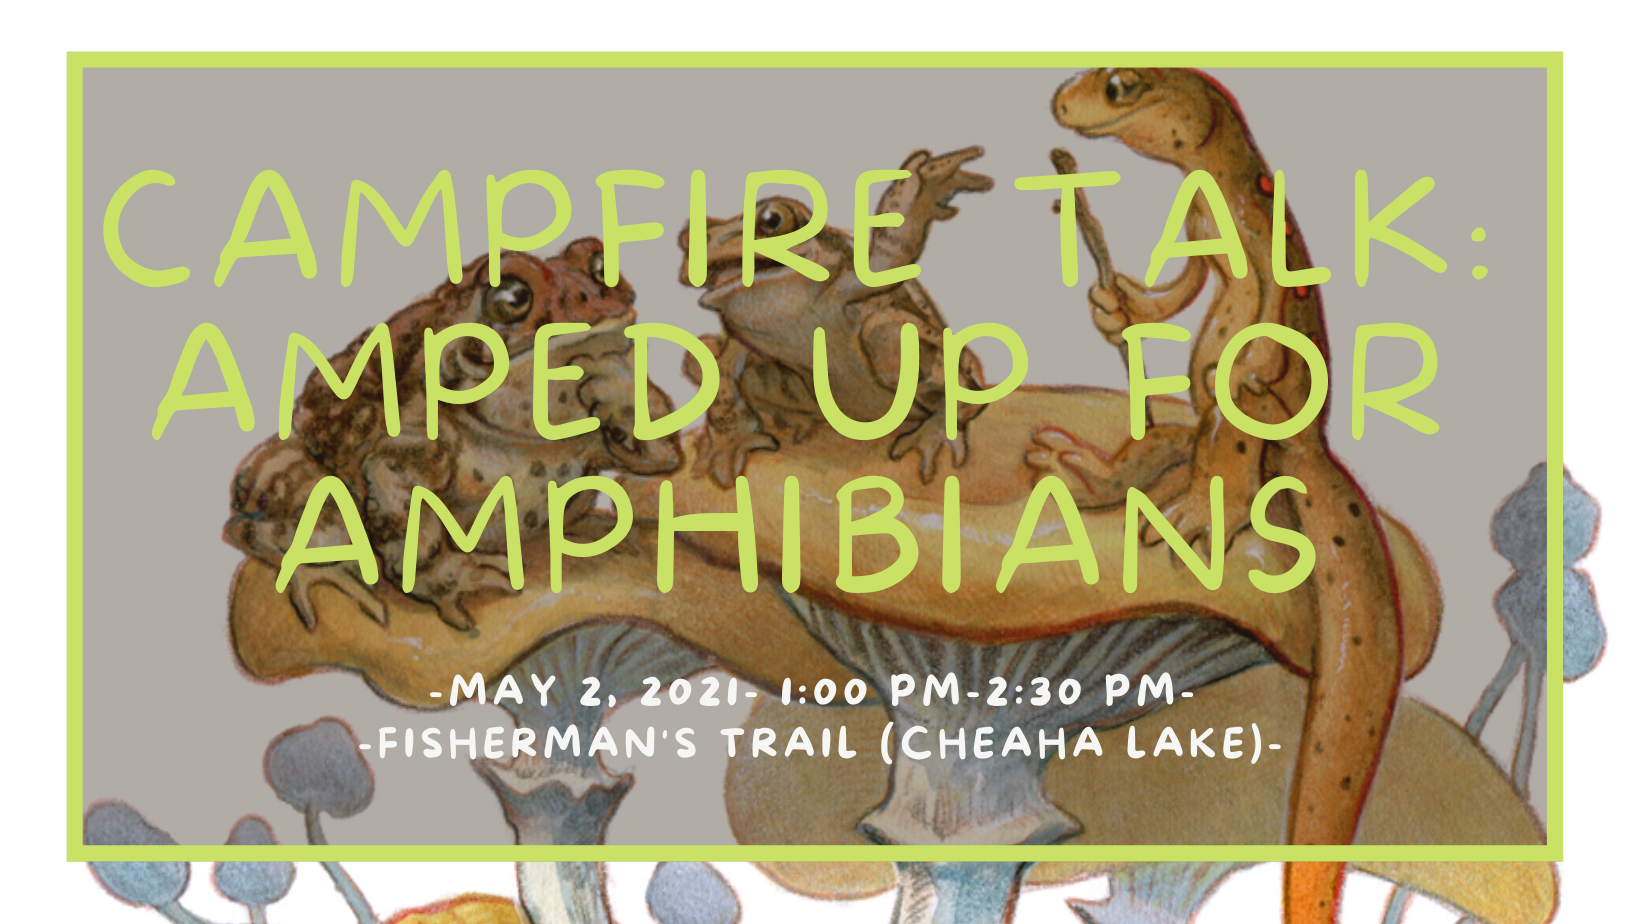 CSP Campfire Talk: Amped Up for Amphibians